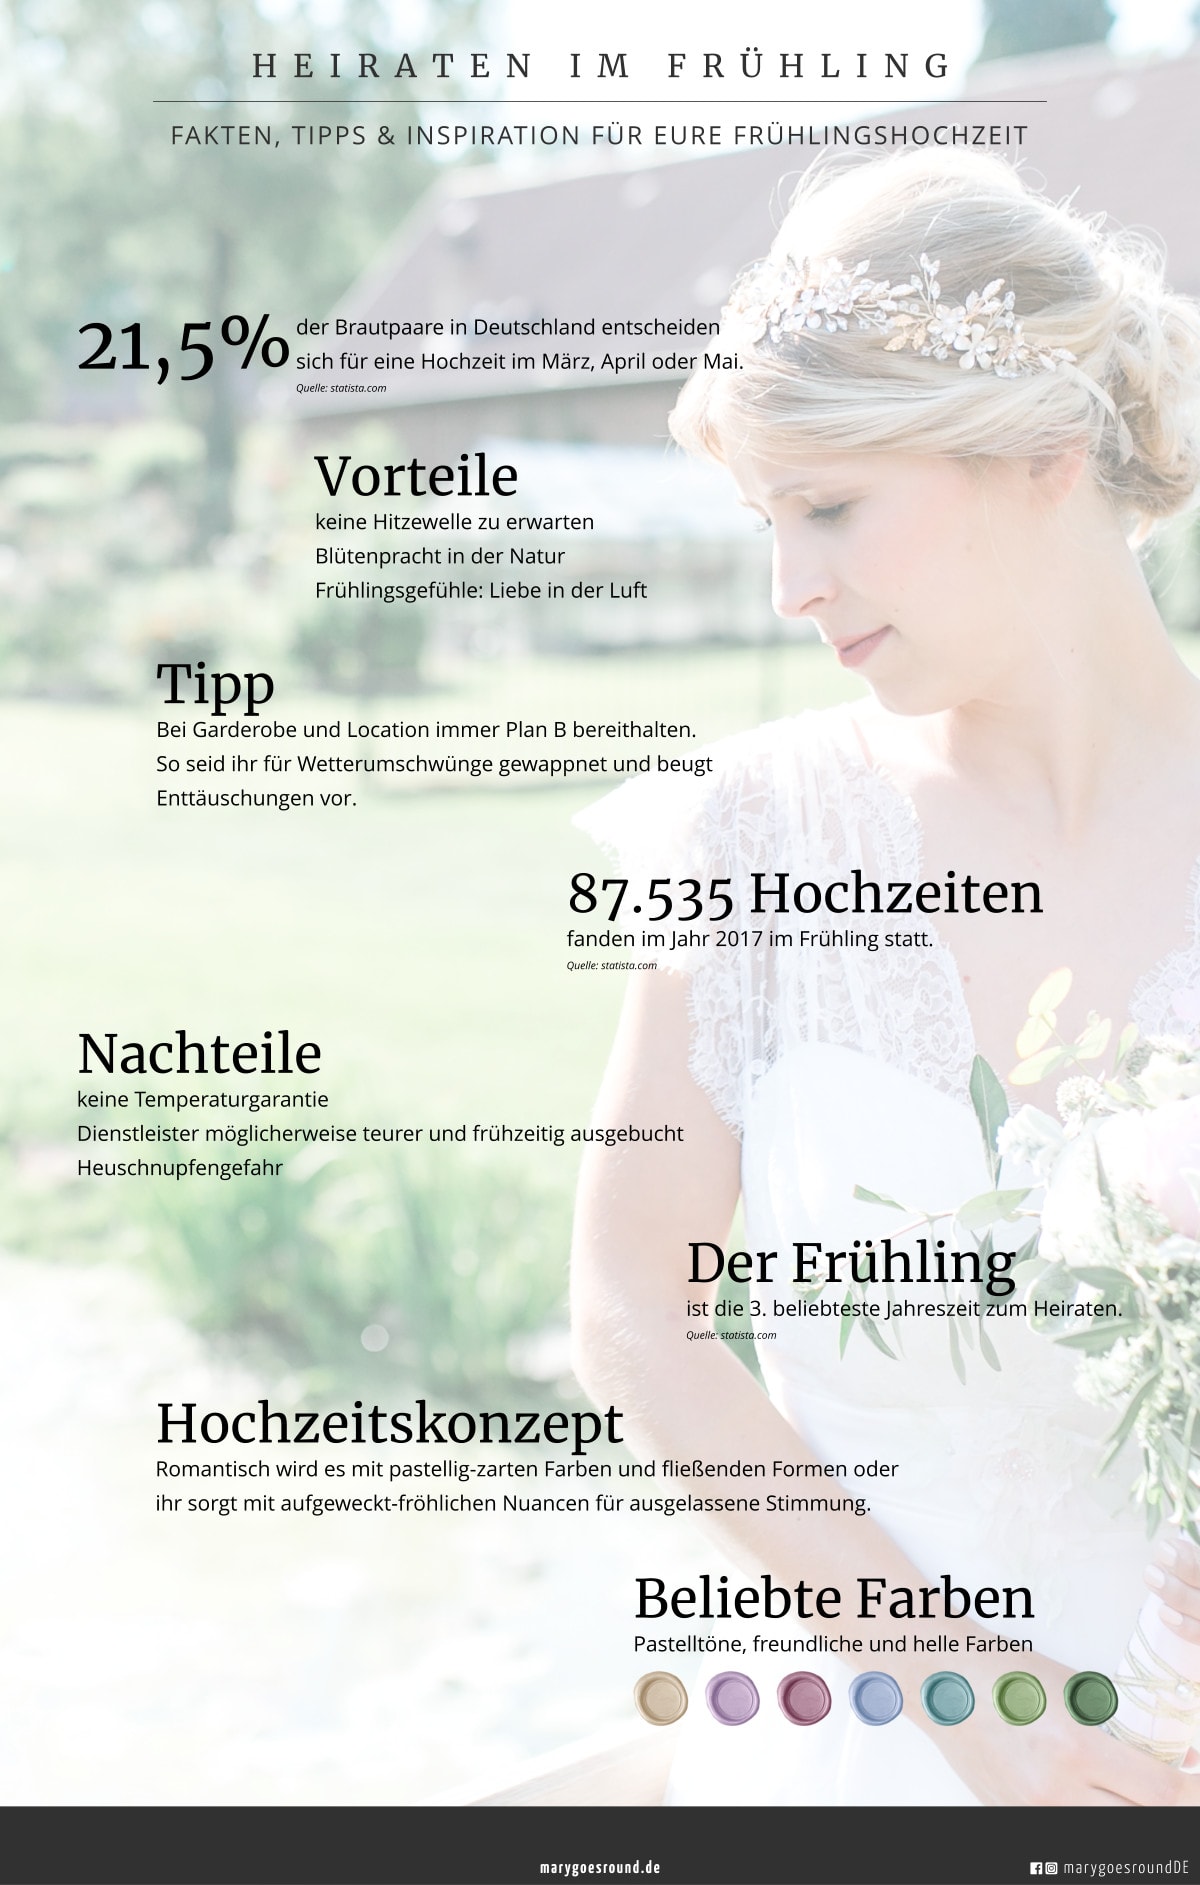 Blogserie "Hochzeit 4 Stagioni": Heiraten im Frühling, Infografik | marygoesround®